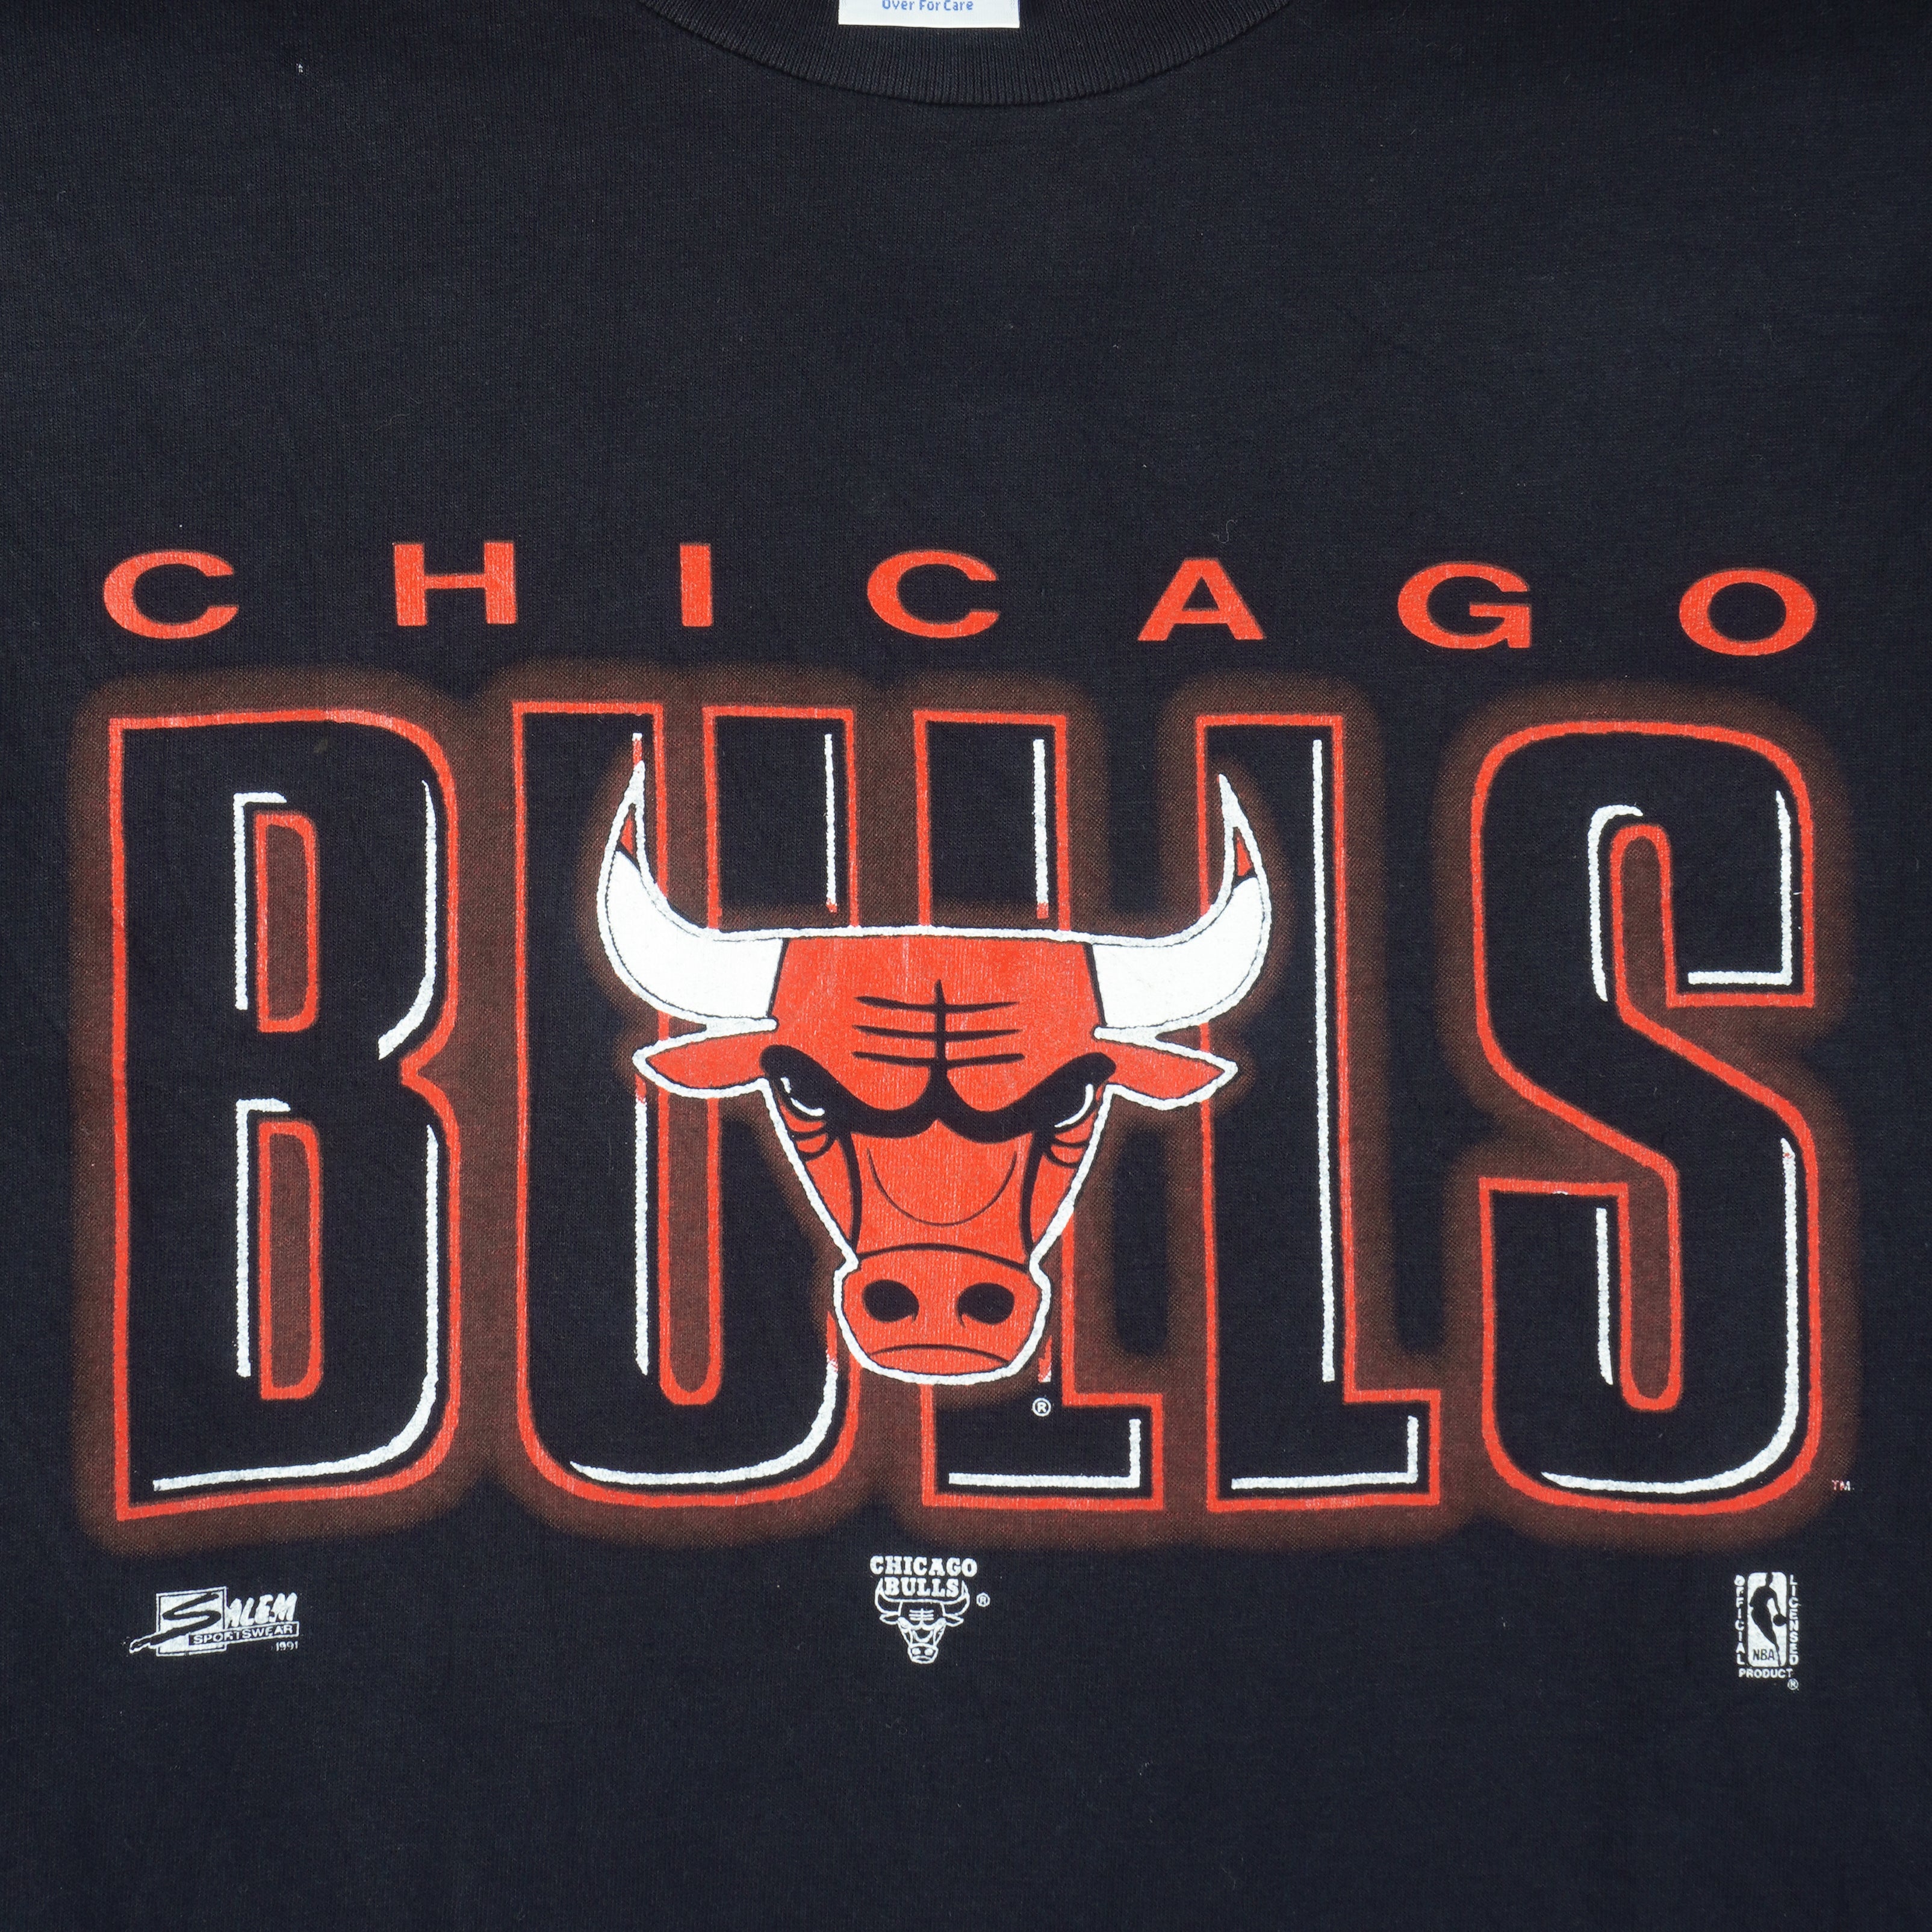 1993 Chicago Bulls Salem Sportswear Comic Strip NBA T Shirt Size